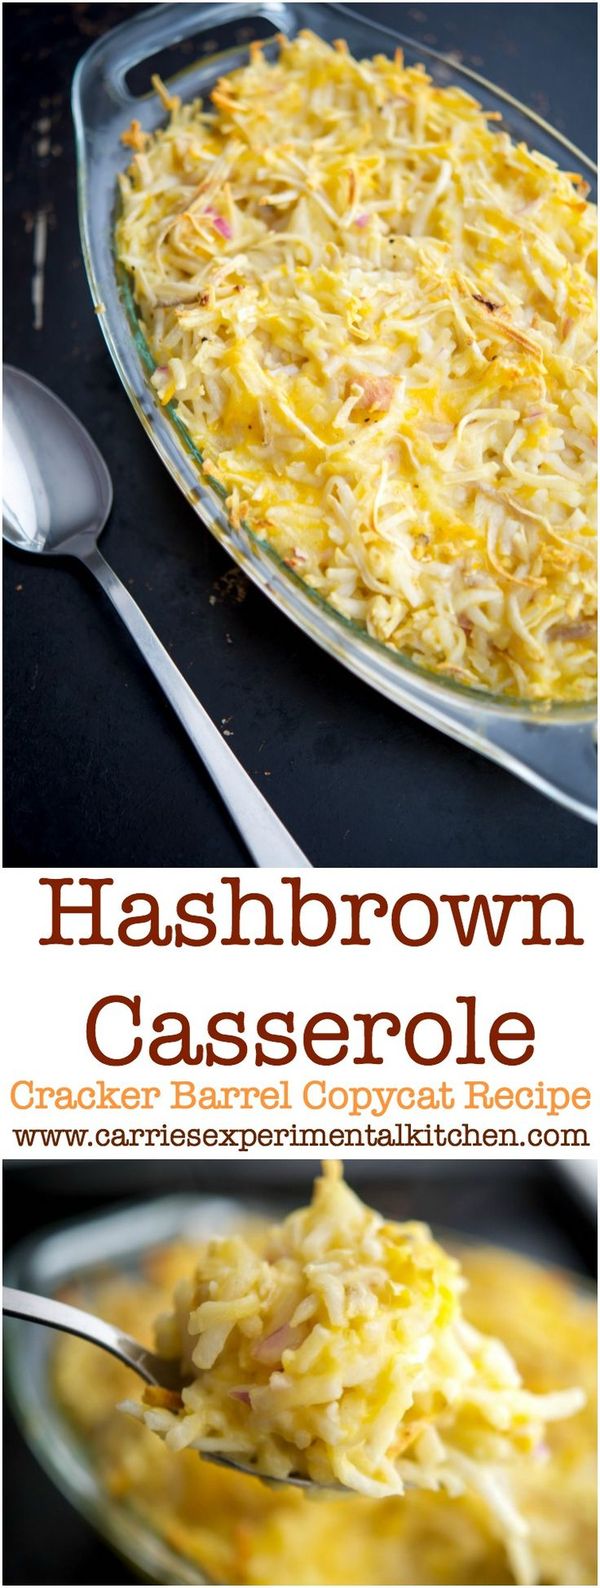 Hashbrown Casserole (Cracker Barrel Copycat